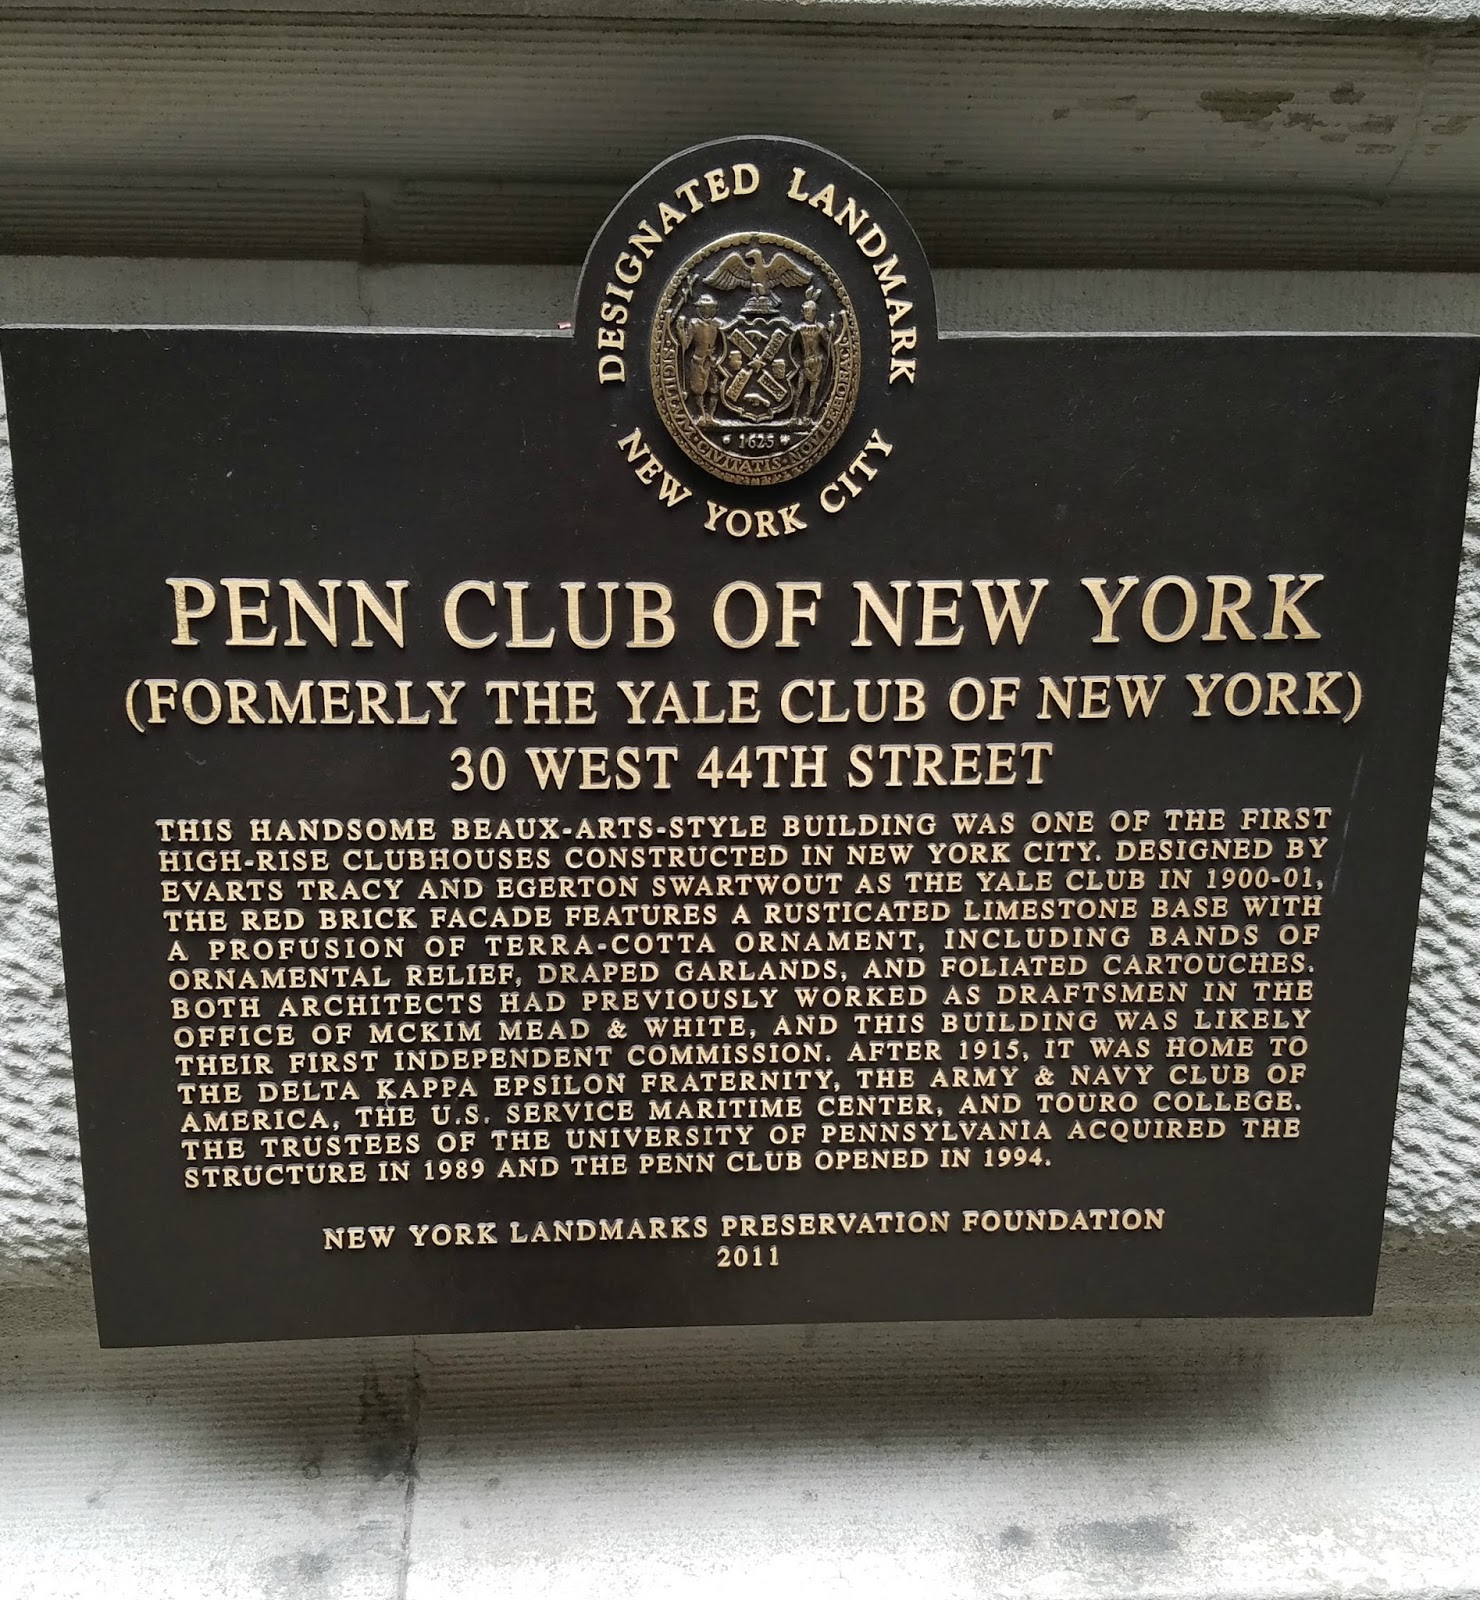 Types of Membership - Penn Club of New York